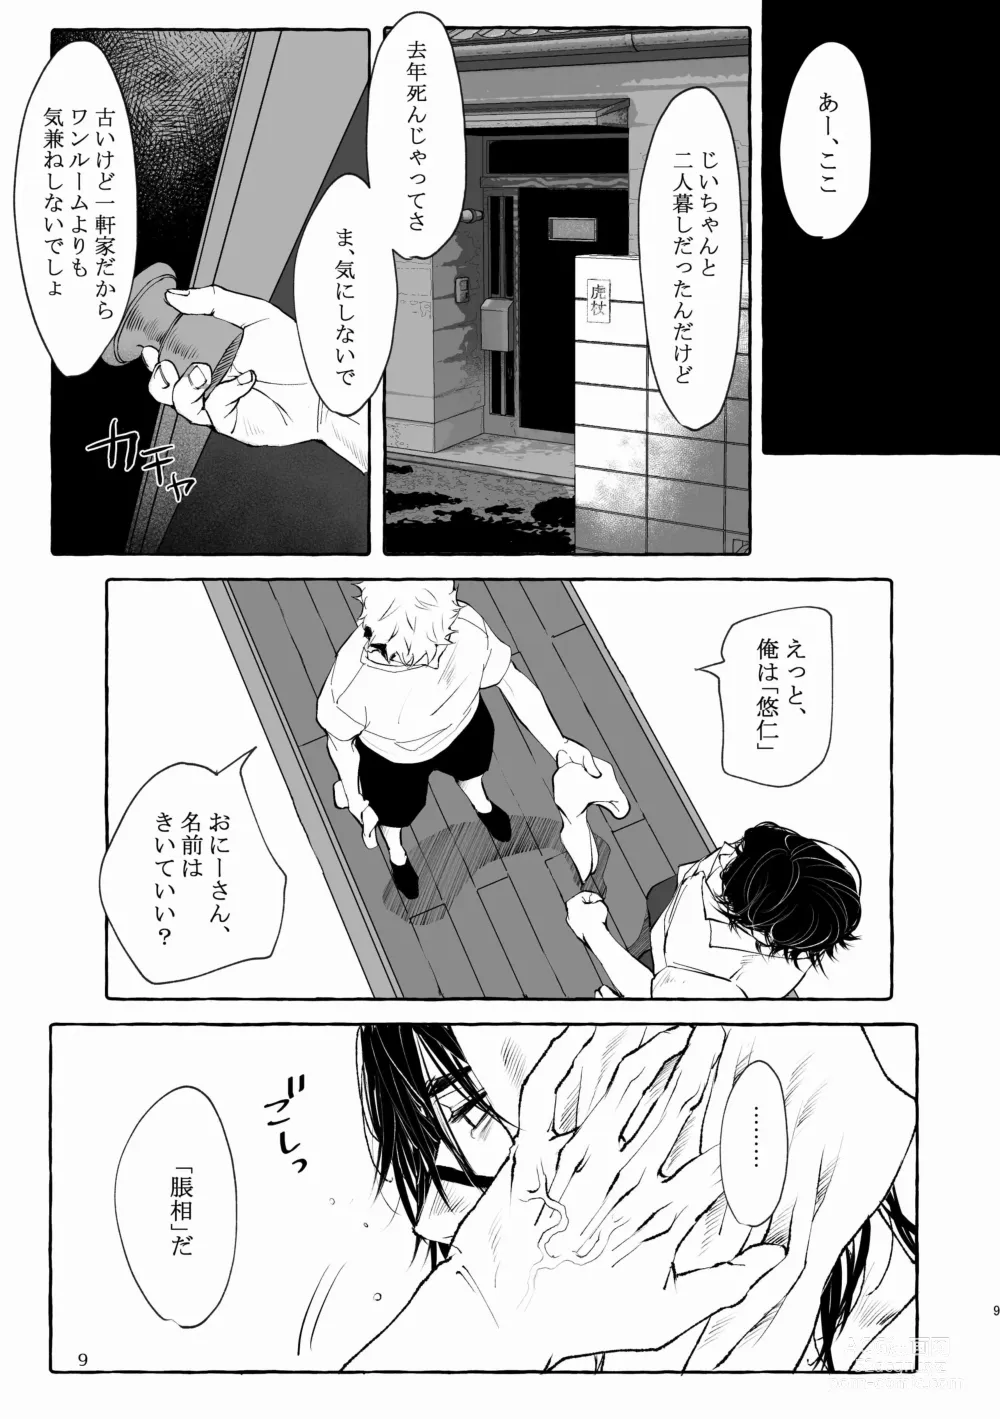 Page 9 of doujinshi Inryoku no Petrichor